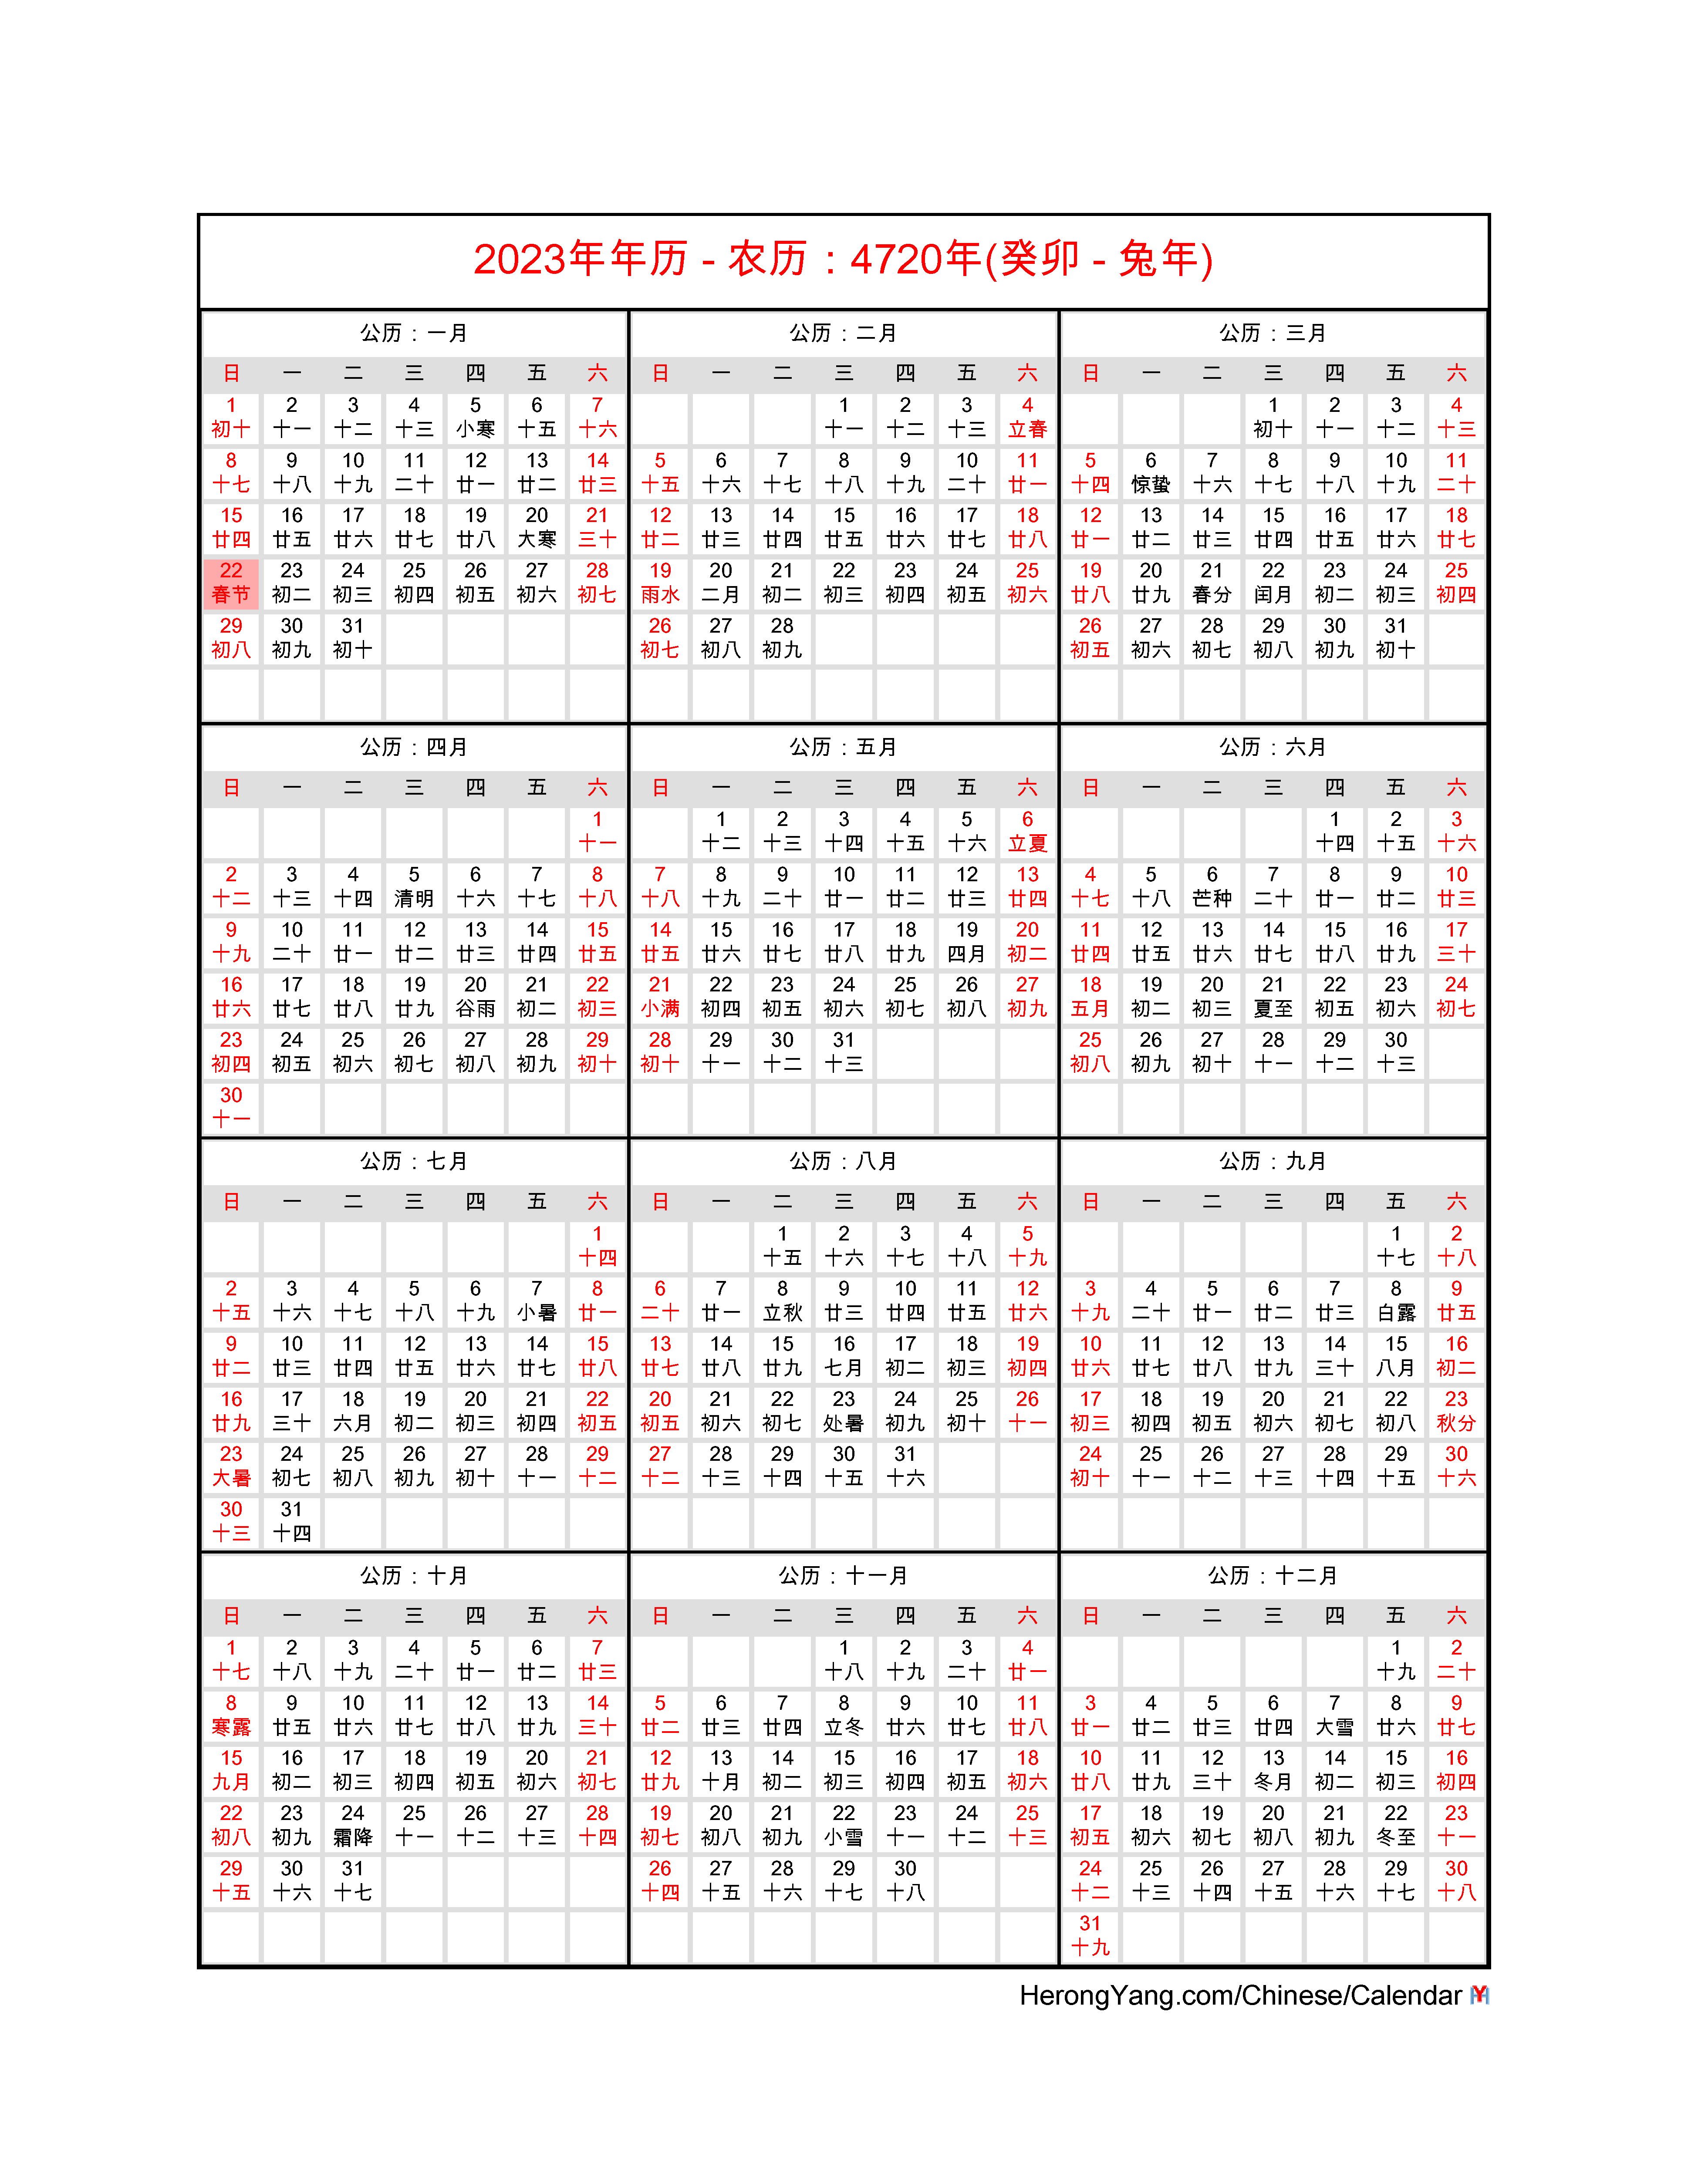  EVOLUT2023 Chinese Calendar for Year of Rabbit, Spring